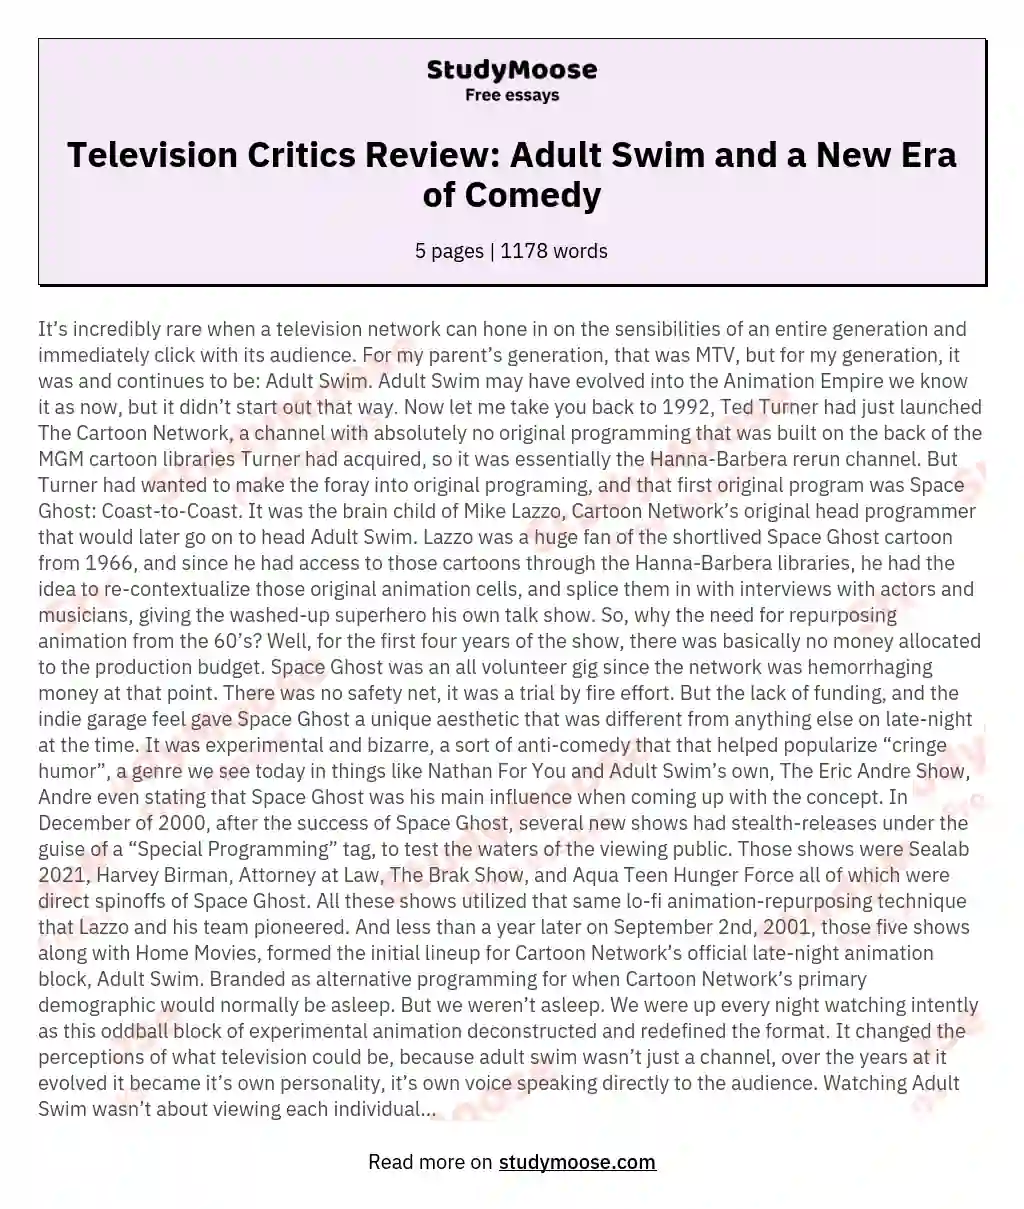 Television Critics Review: Adult Swim and a New Era of Comedy essay